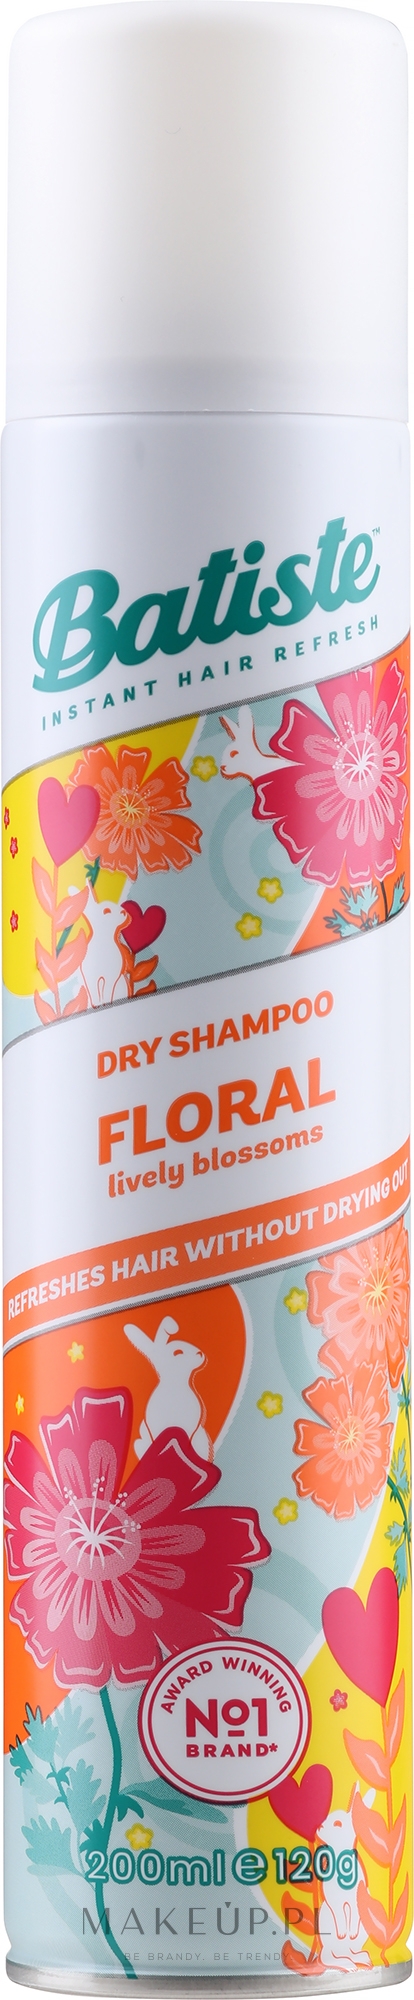 Suchy szampon - Batiste Dry Shampoo Bright and Lively Floral Essences — Zdjęcie 200 ml